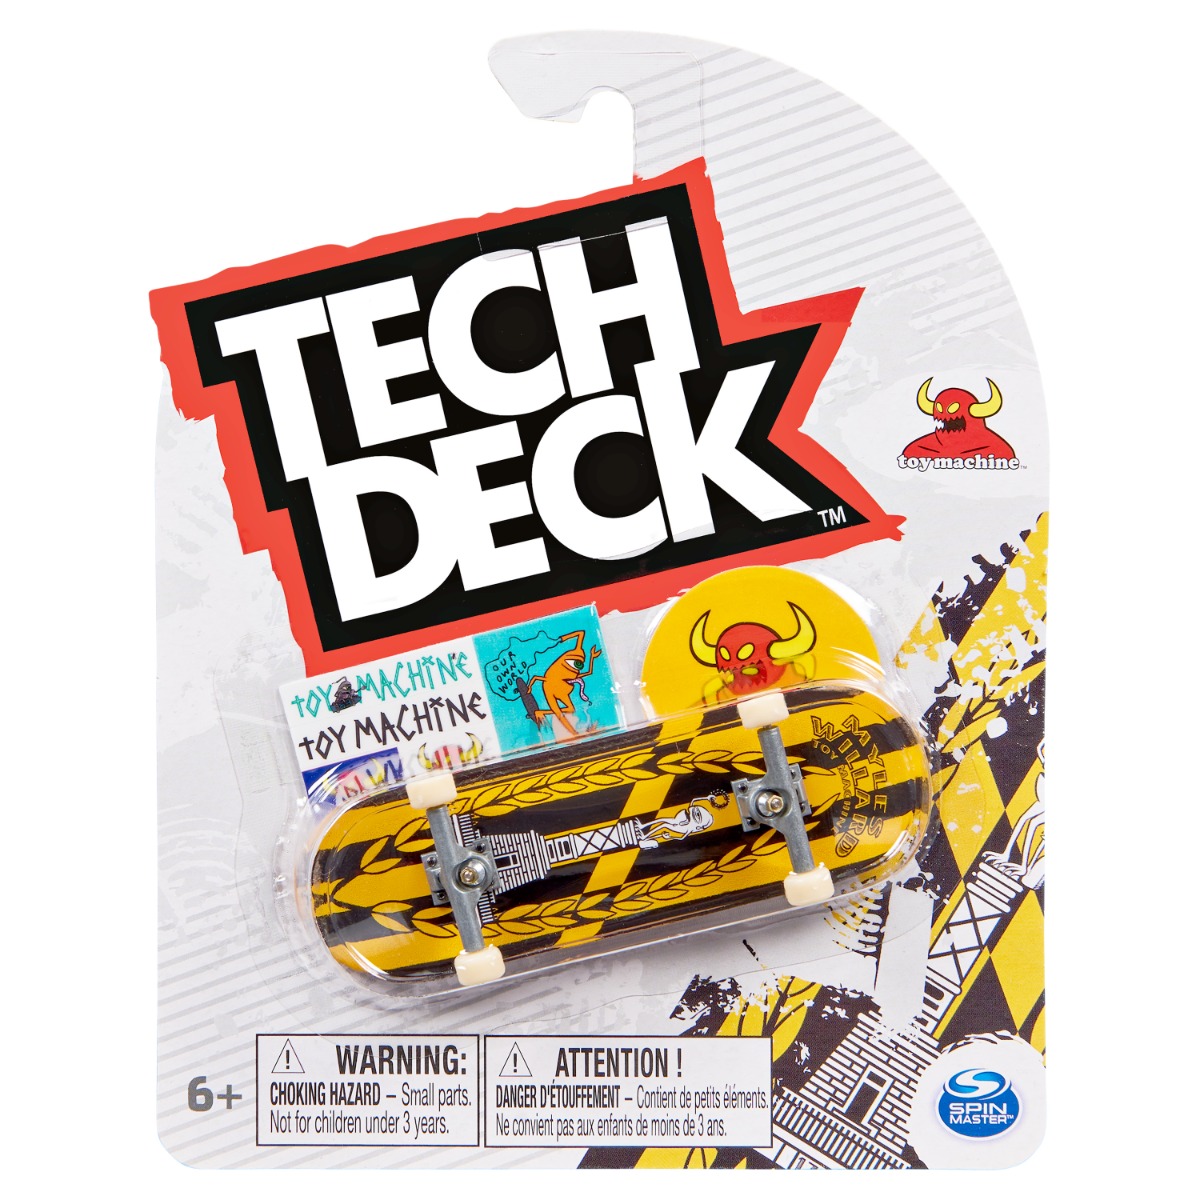 Mini placa skateboard Tech Deck, Toy machine Miles Willard, 20141223 20141223